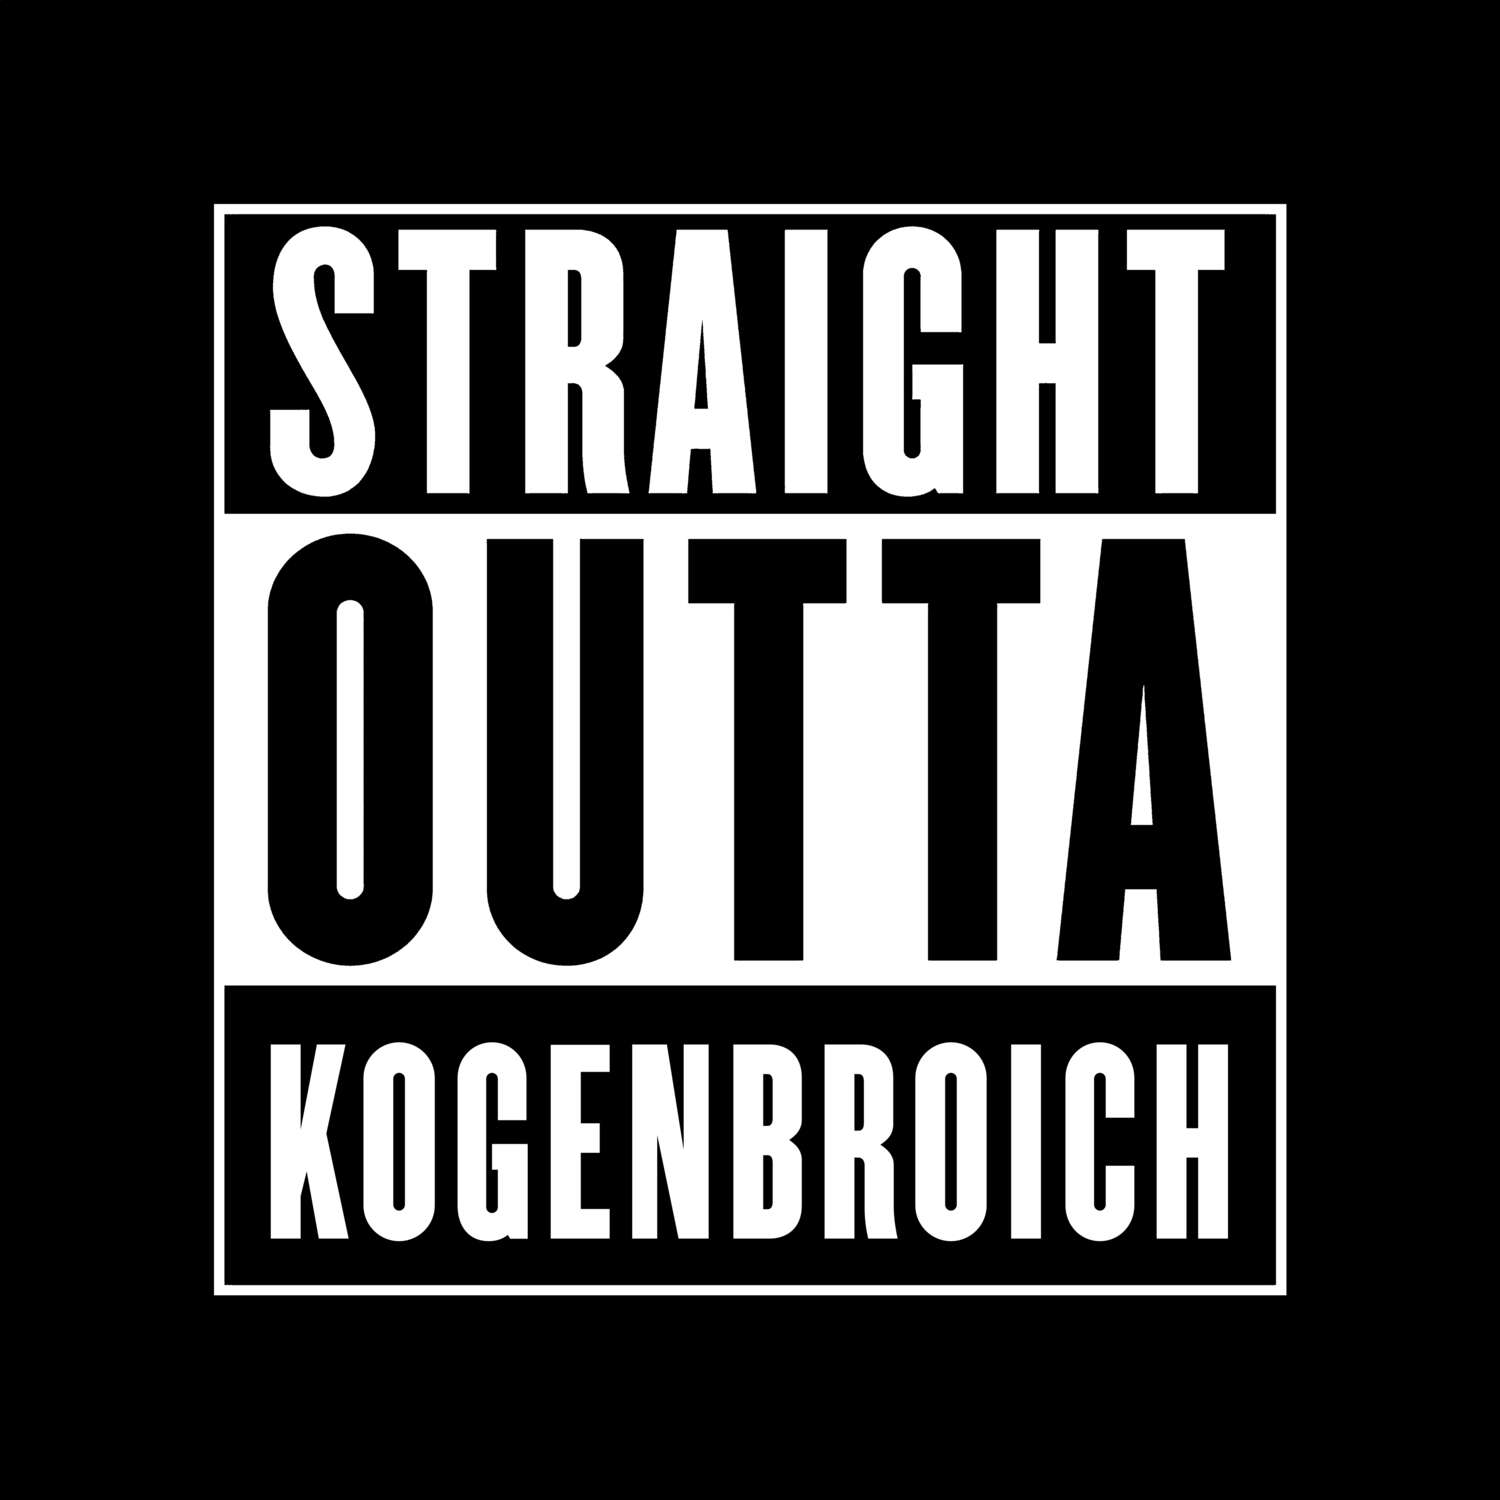 Kogenbroich T-Shirt »Straight Outta«